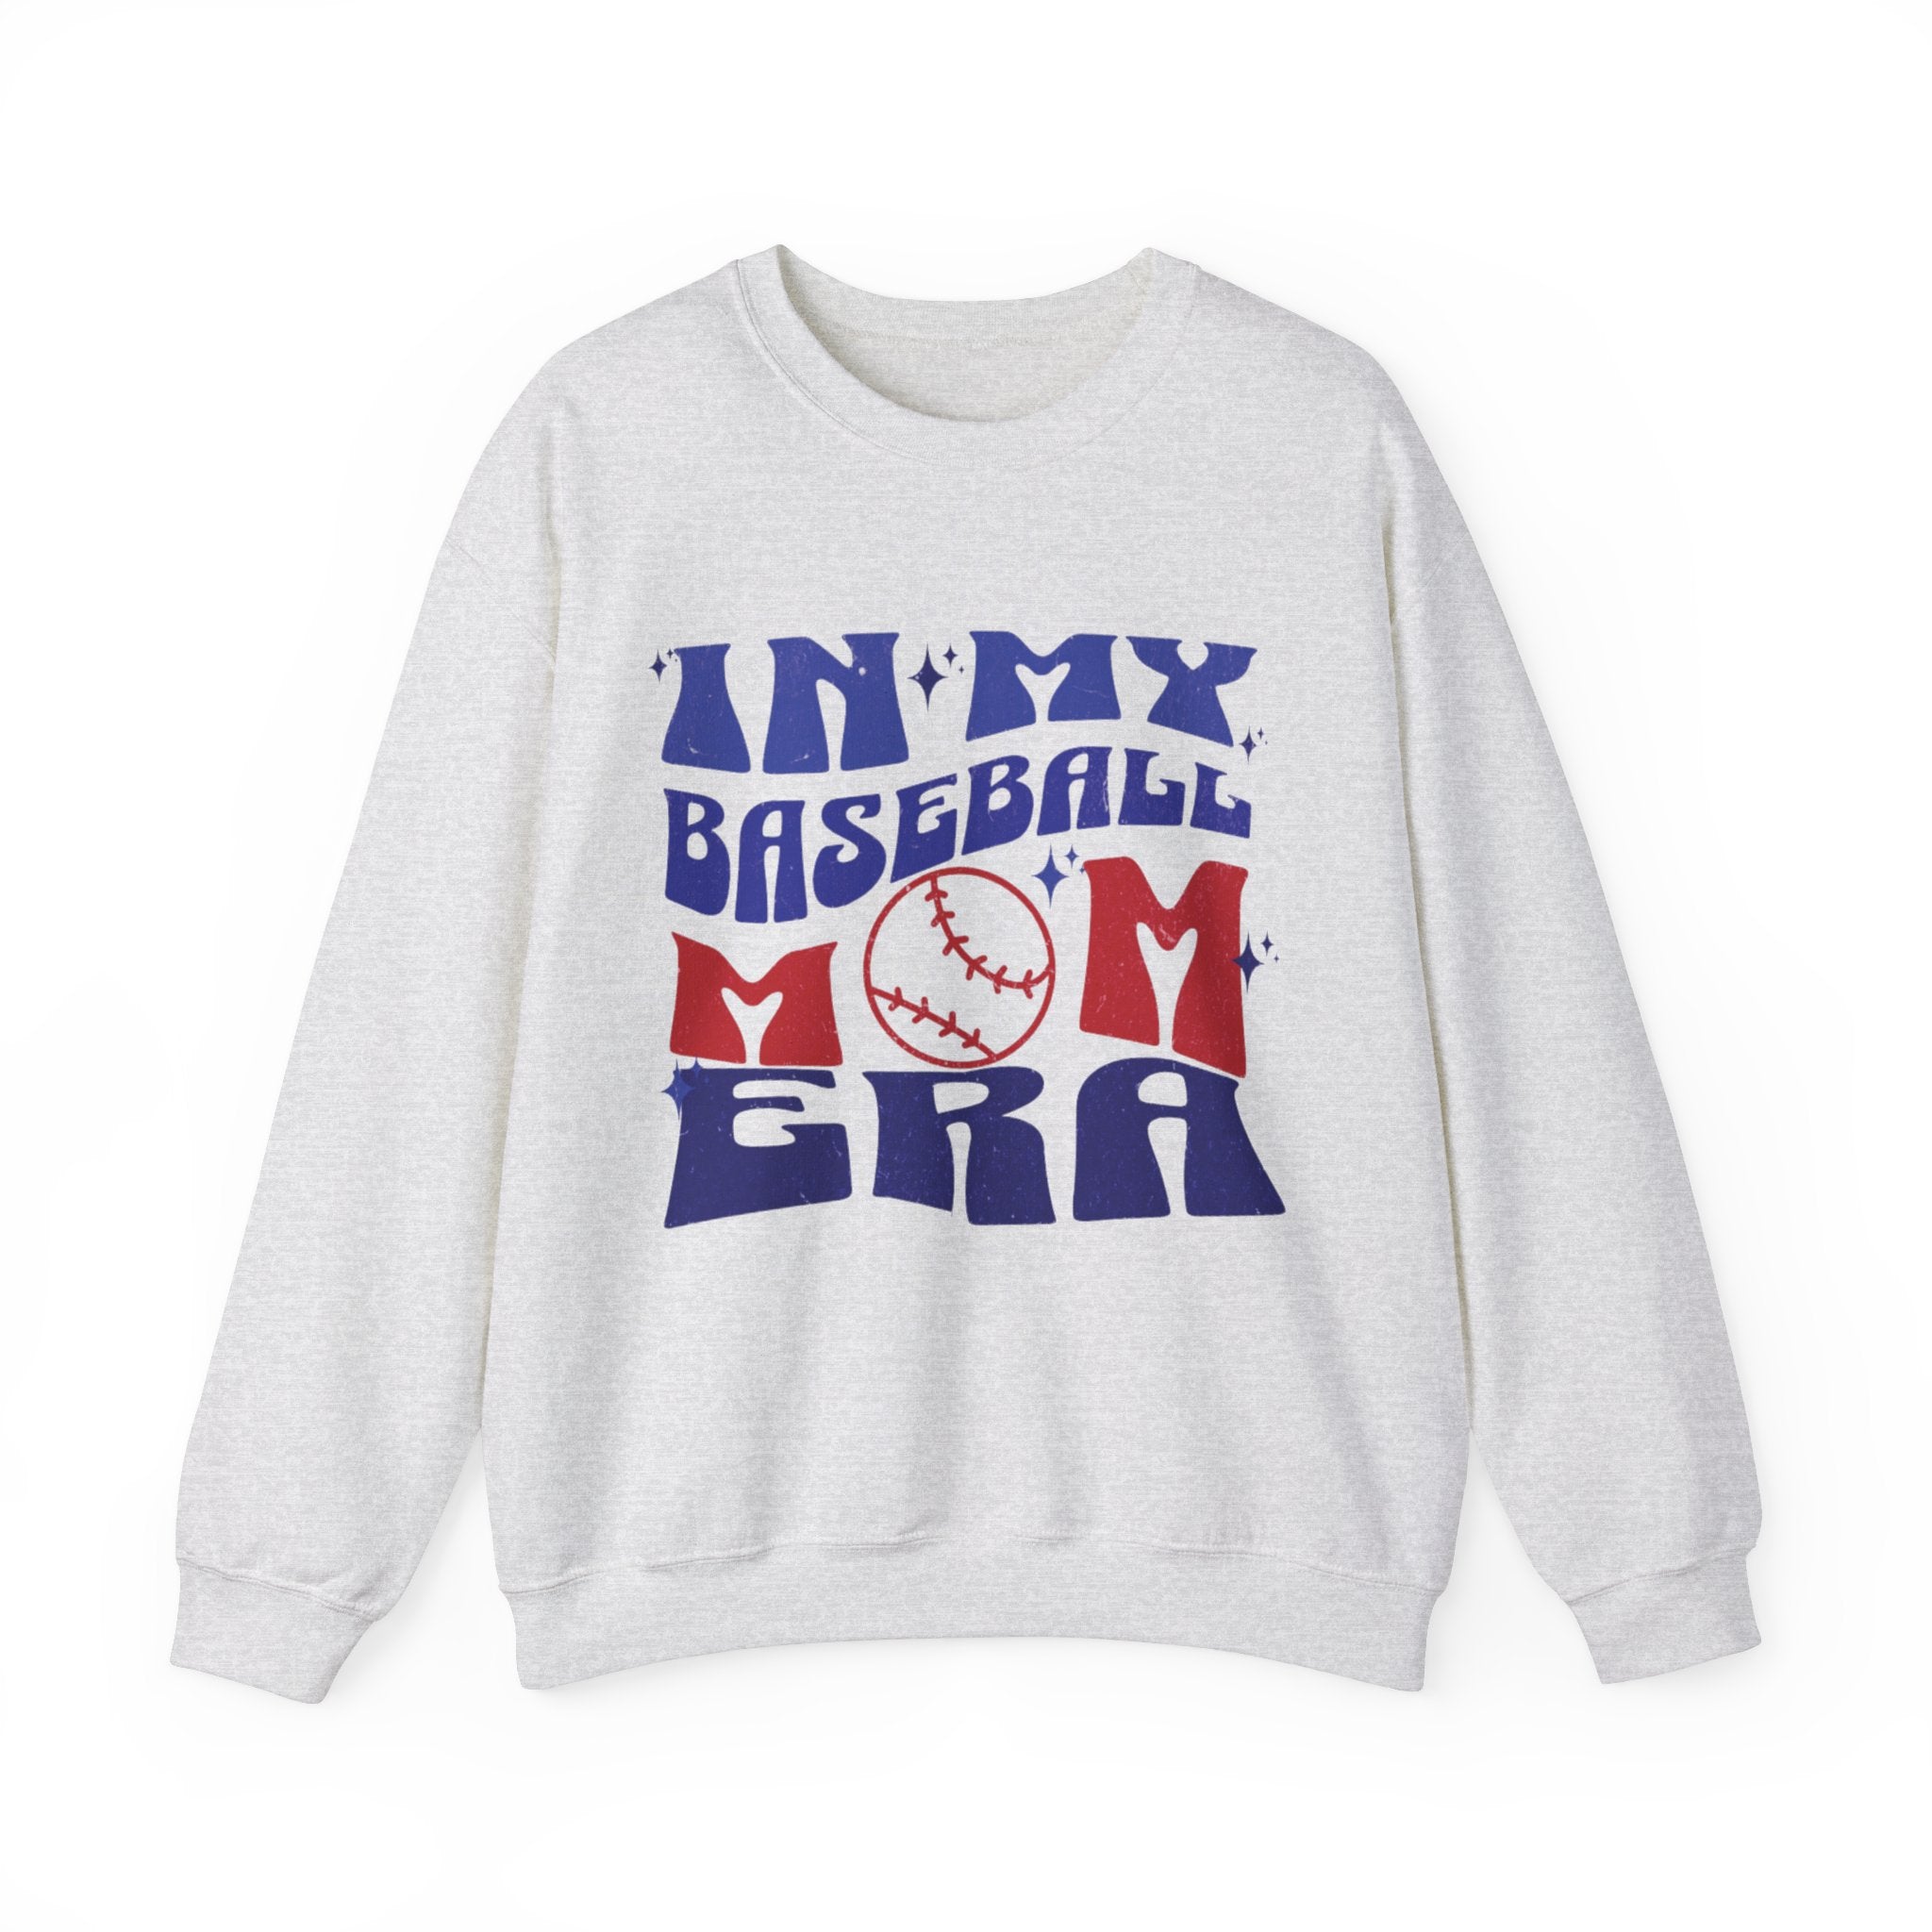 Baseball Mom Era Crewneck Sweatshirt